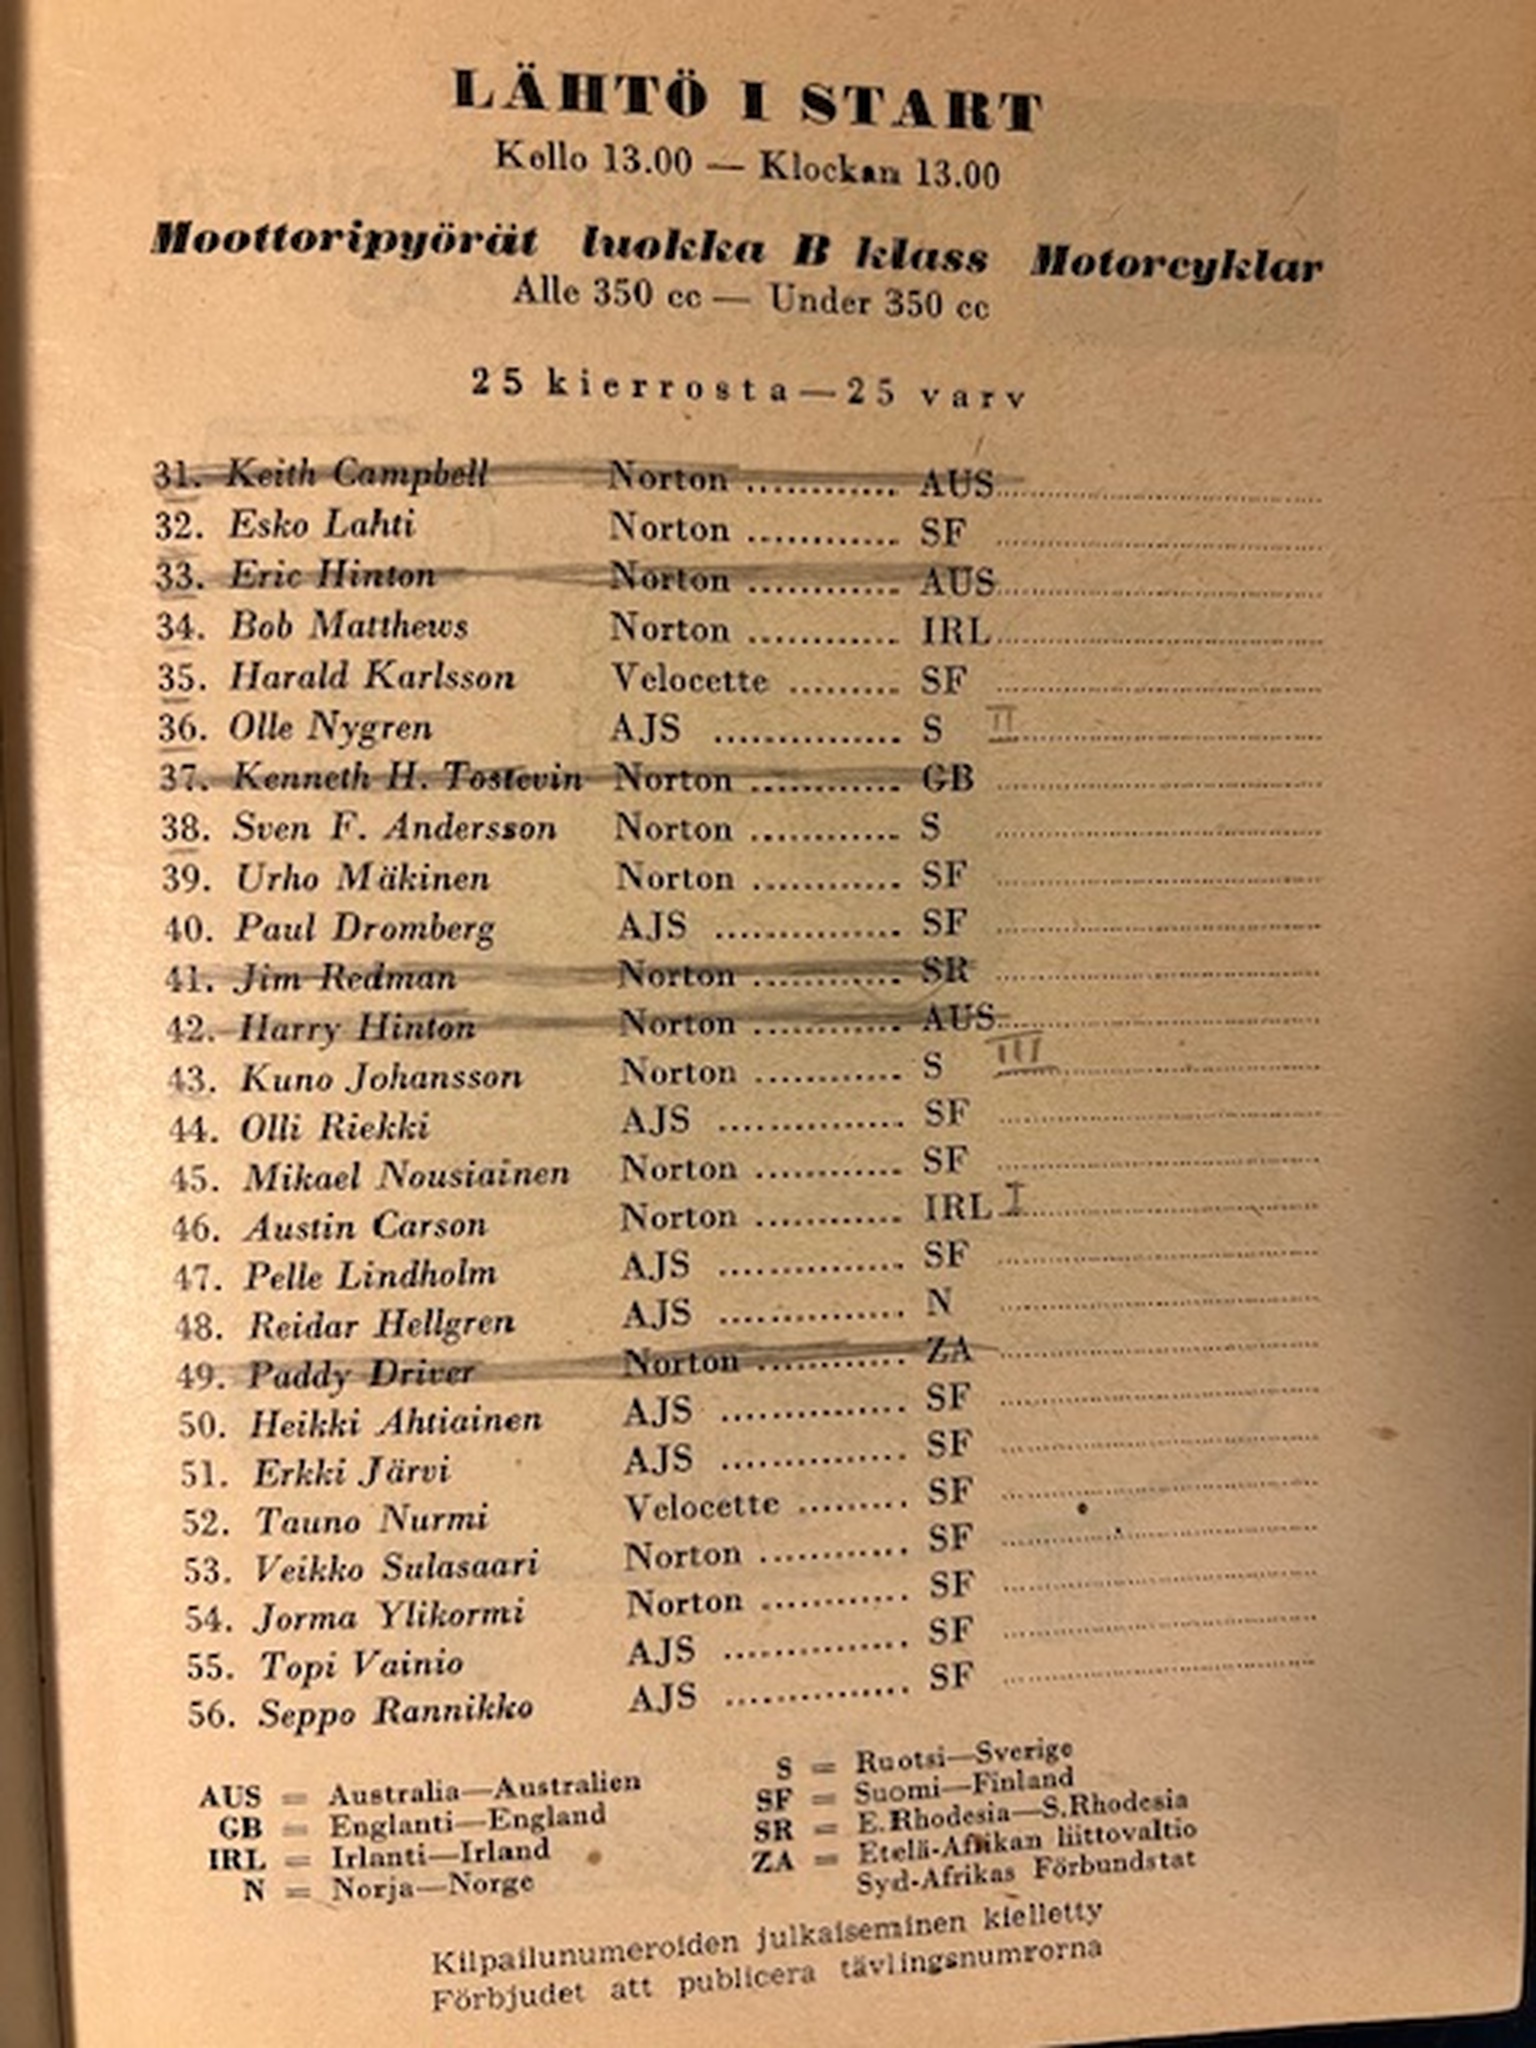 Djurgårdsloppet 1958 program - 66 sid - 15x21 cm - fint!